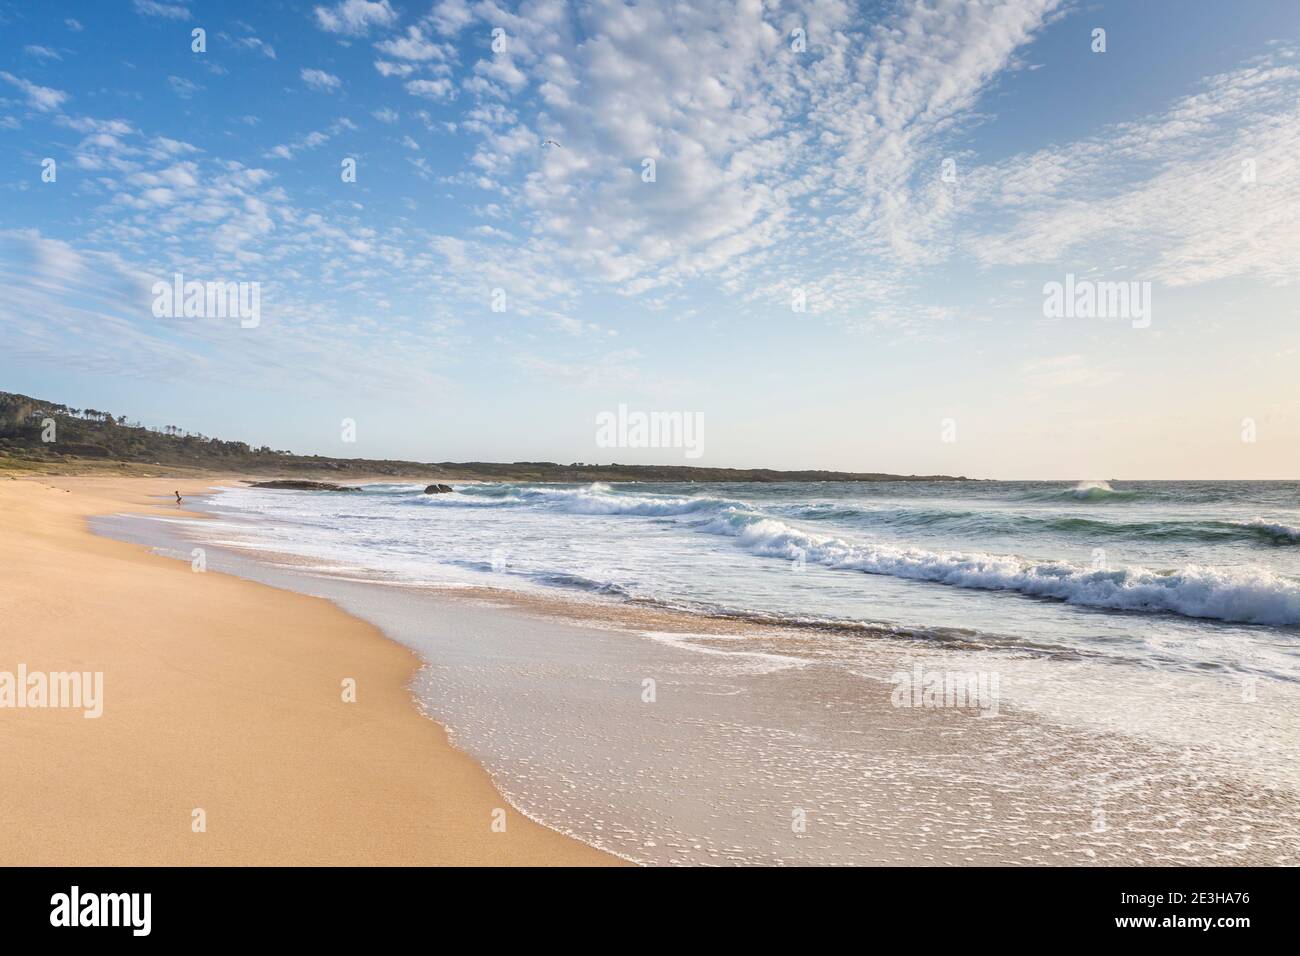 Coast with beautiful sandy beach at sunset, Playa de Seráns, A Coruña, Atlantic Ocean, Galicia, Spain Stock Photo